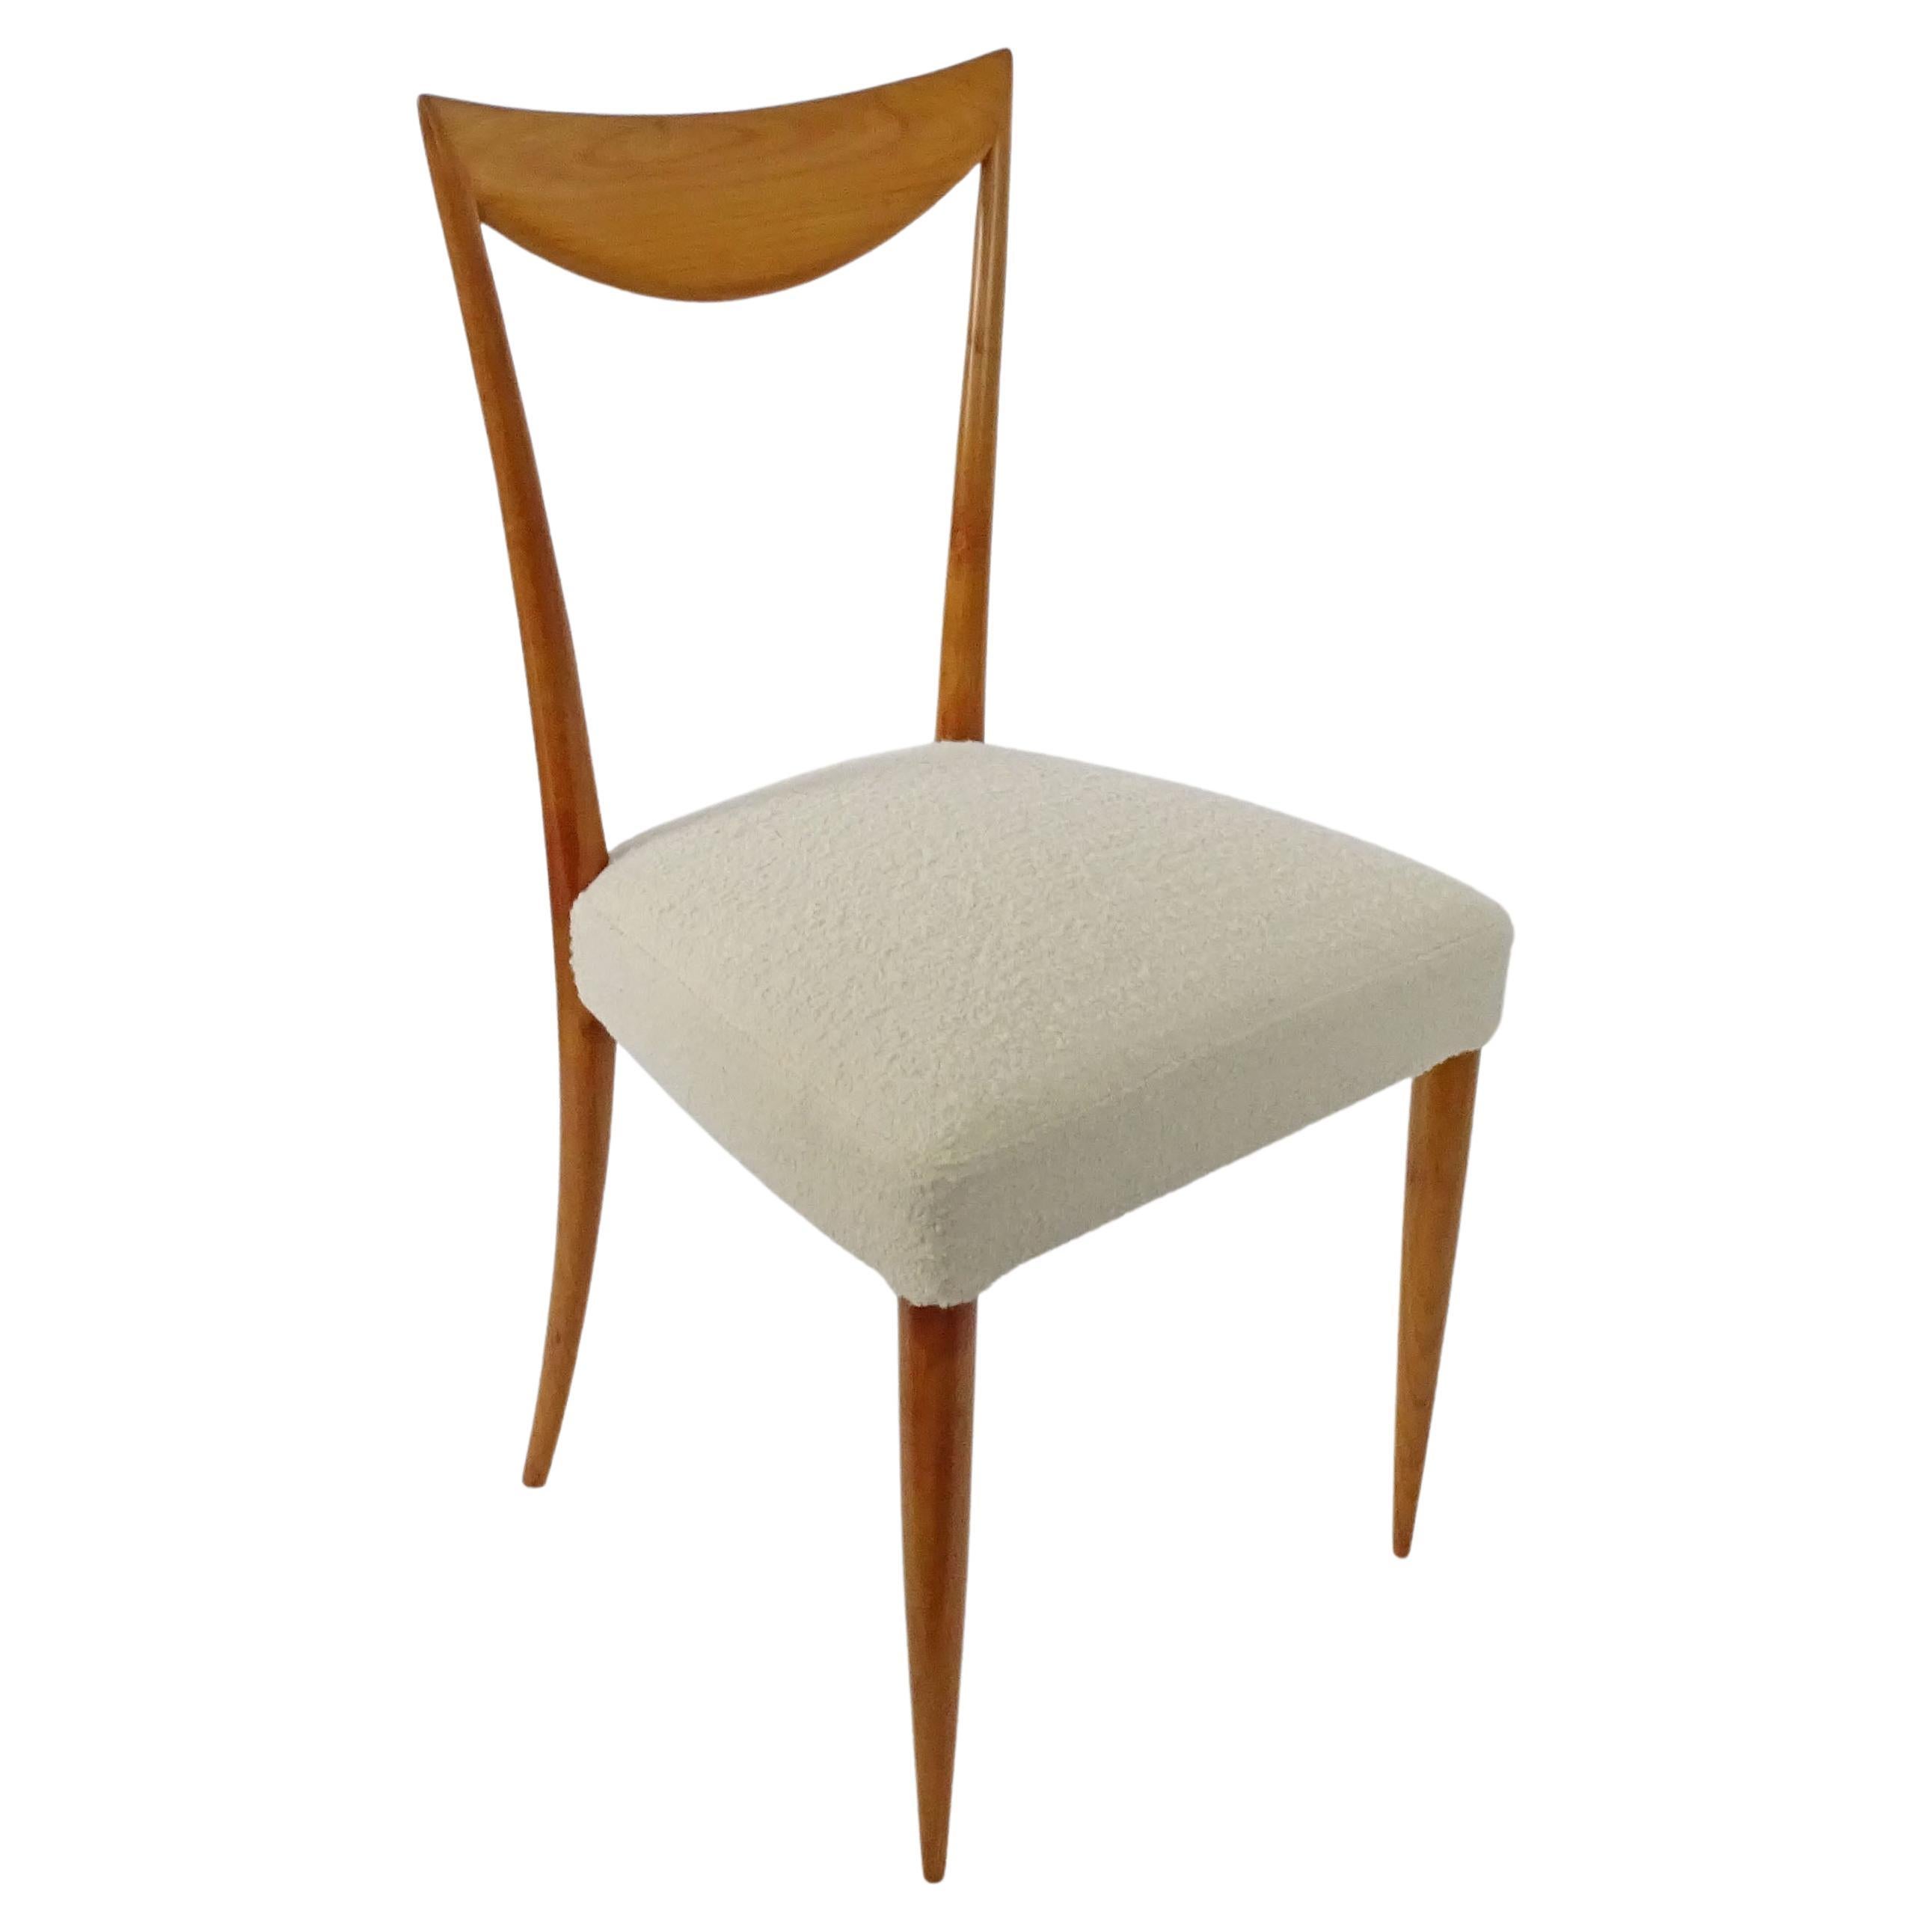 Italian 1950s beautifully sculpted single chair.